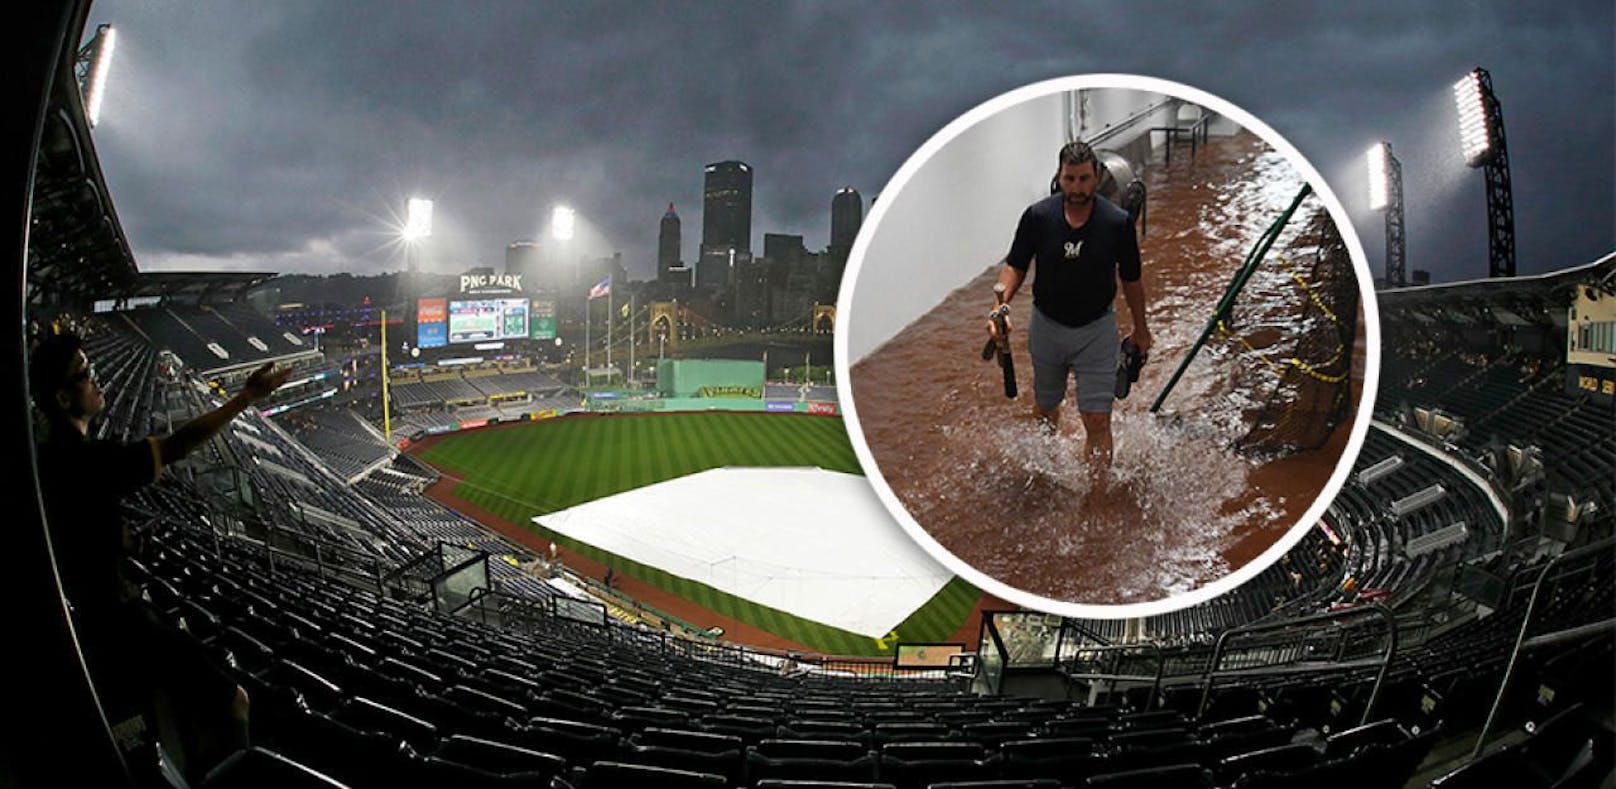 Nach Unwetter: Baseball-Stadion säuft komplett ab